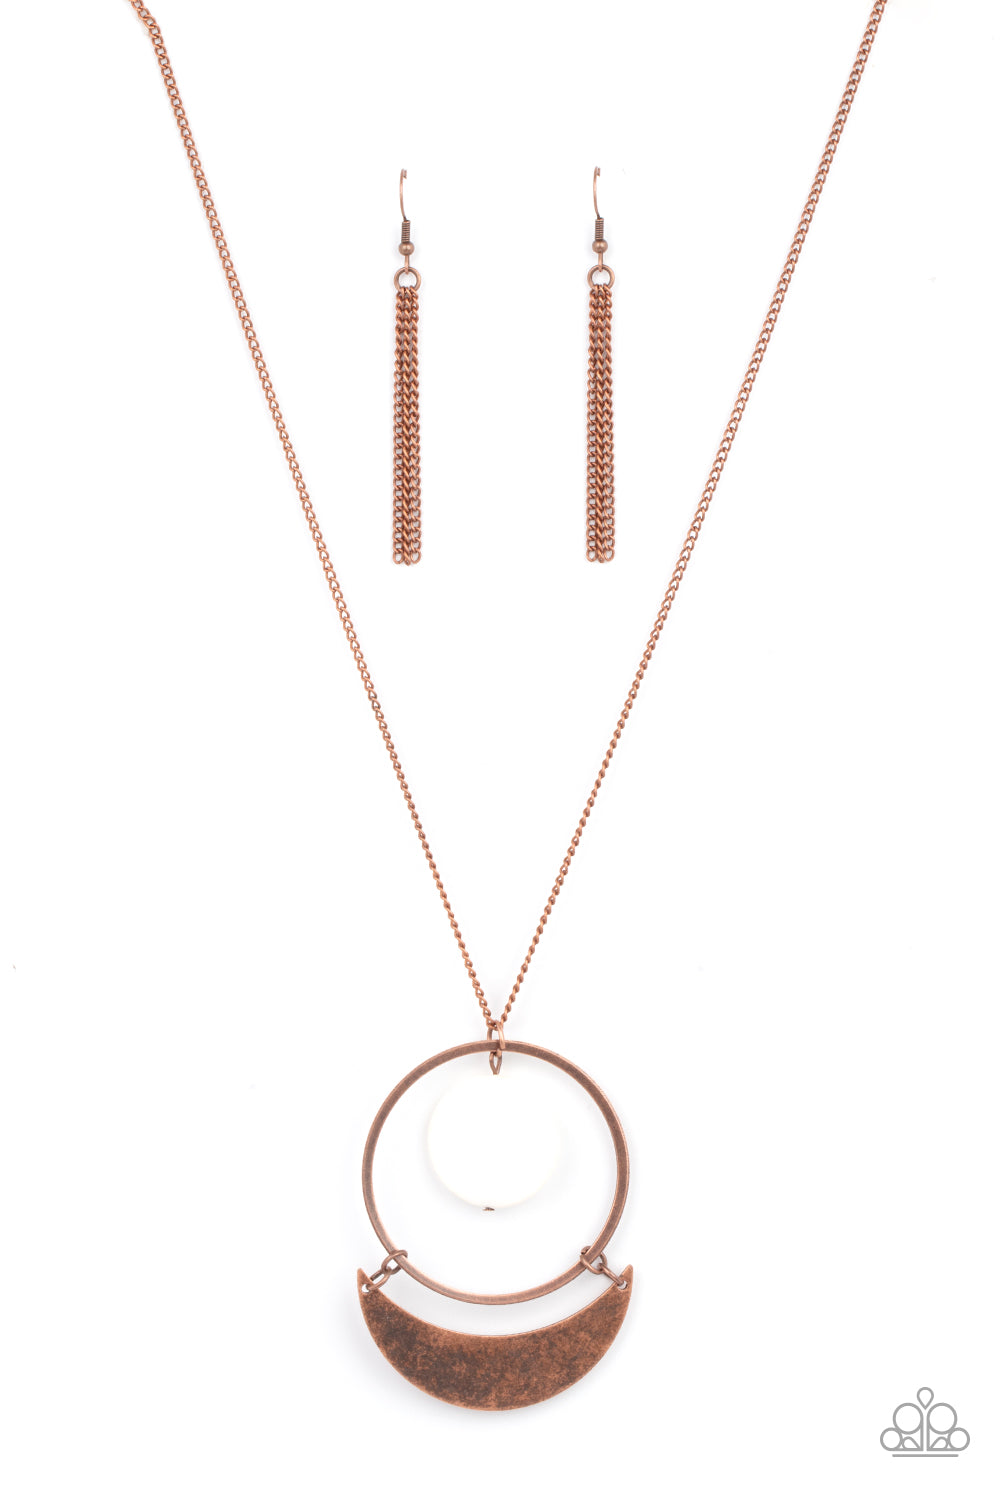 Moonlight Sailing - Copper Necklace